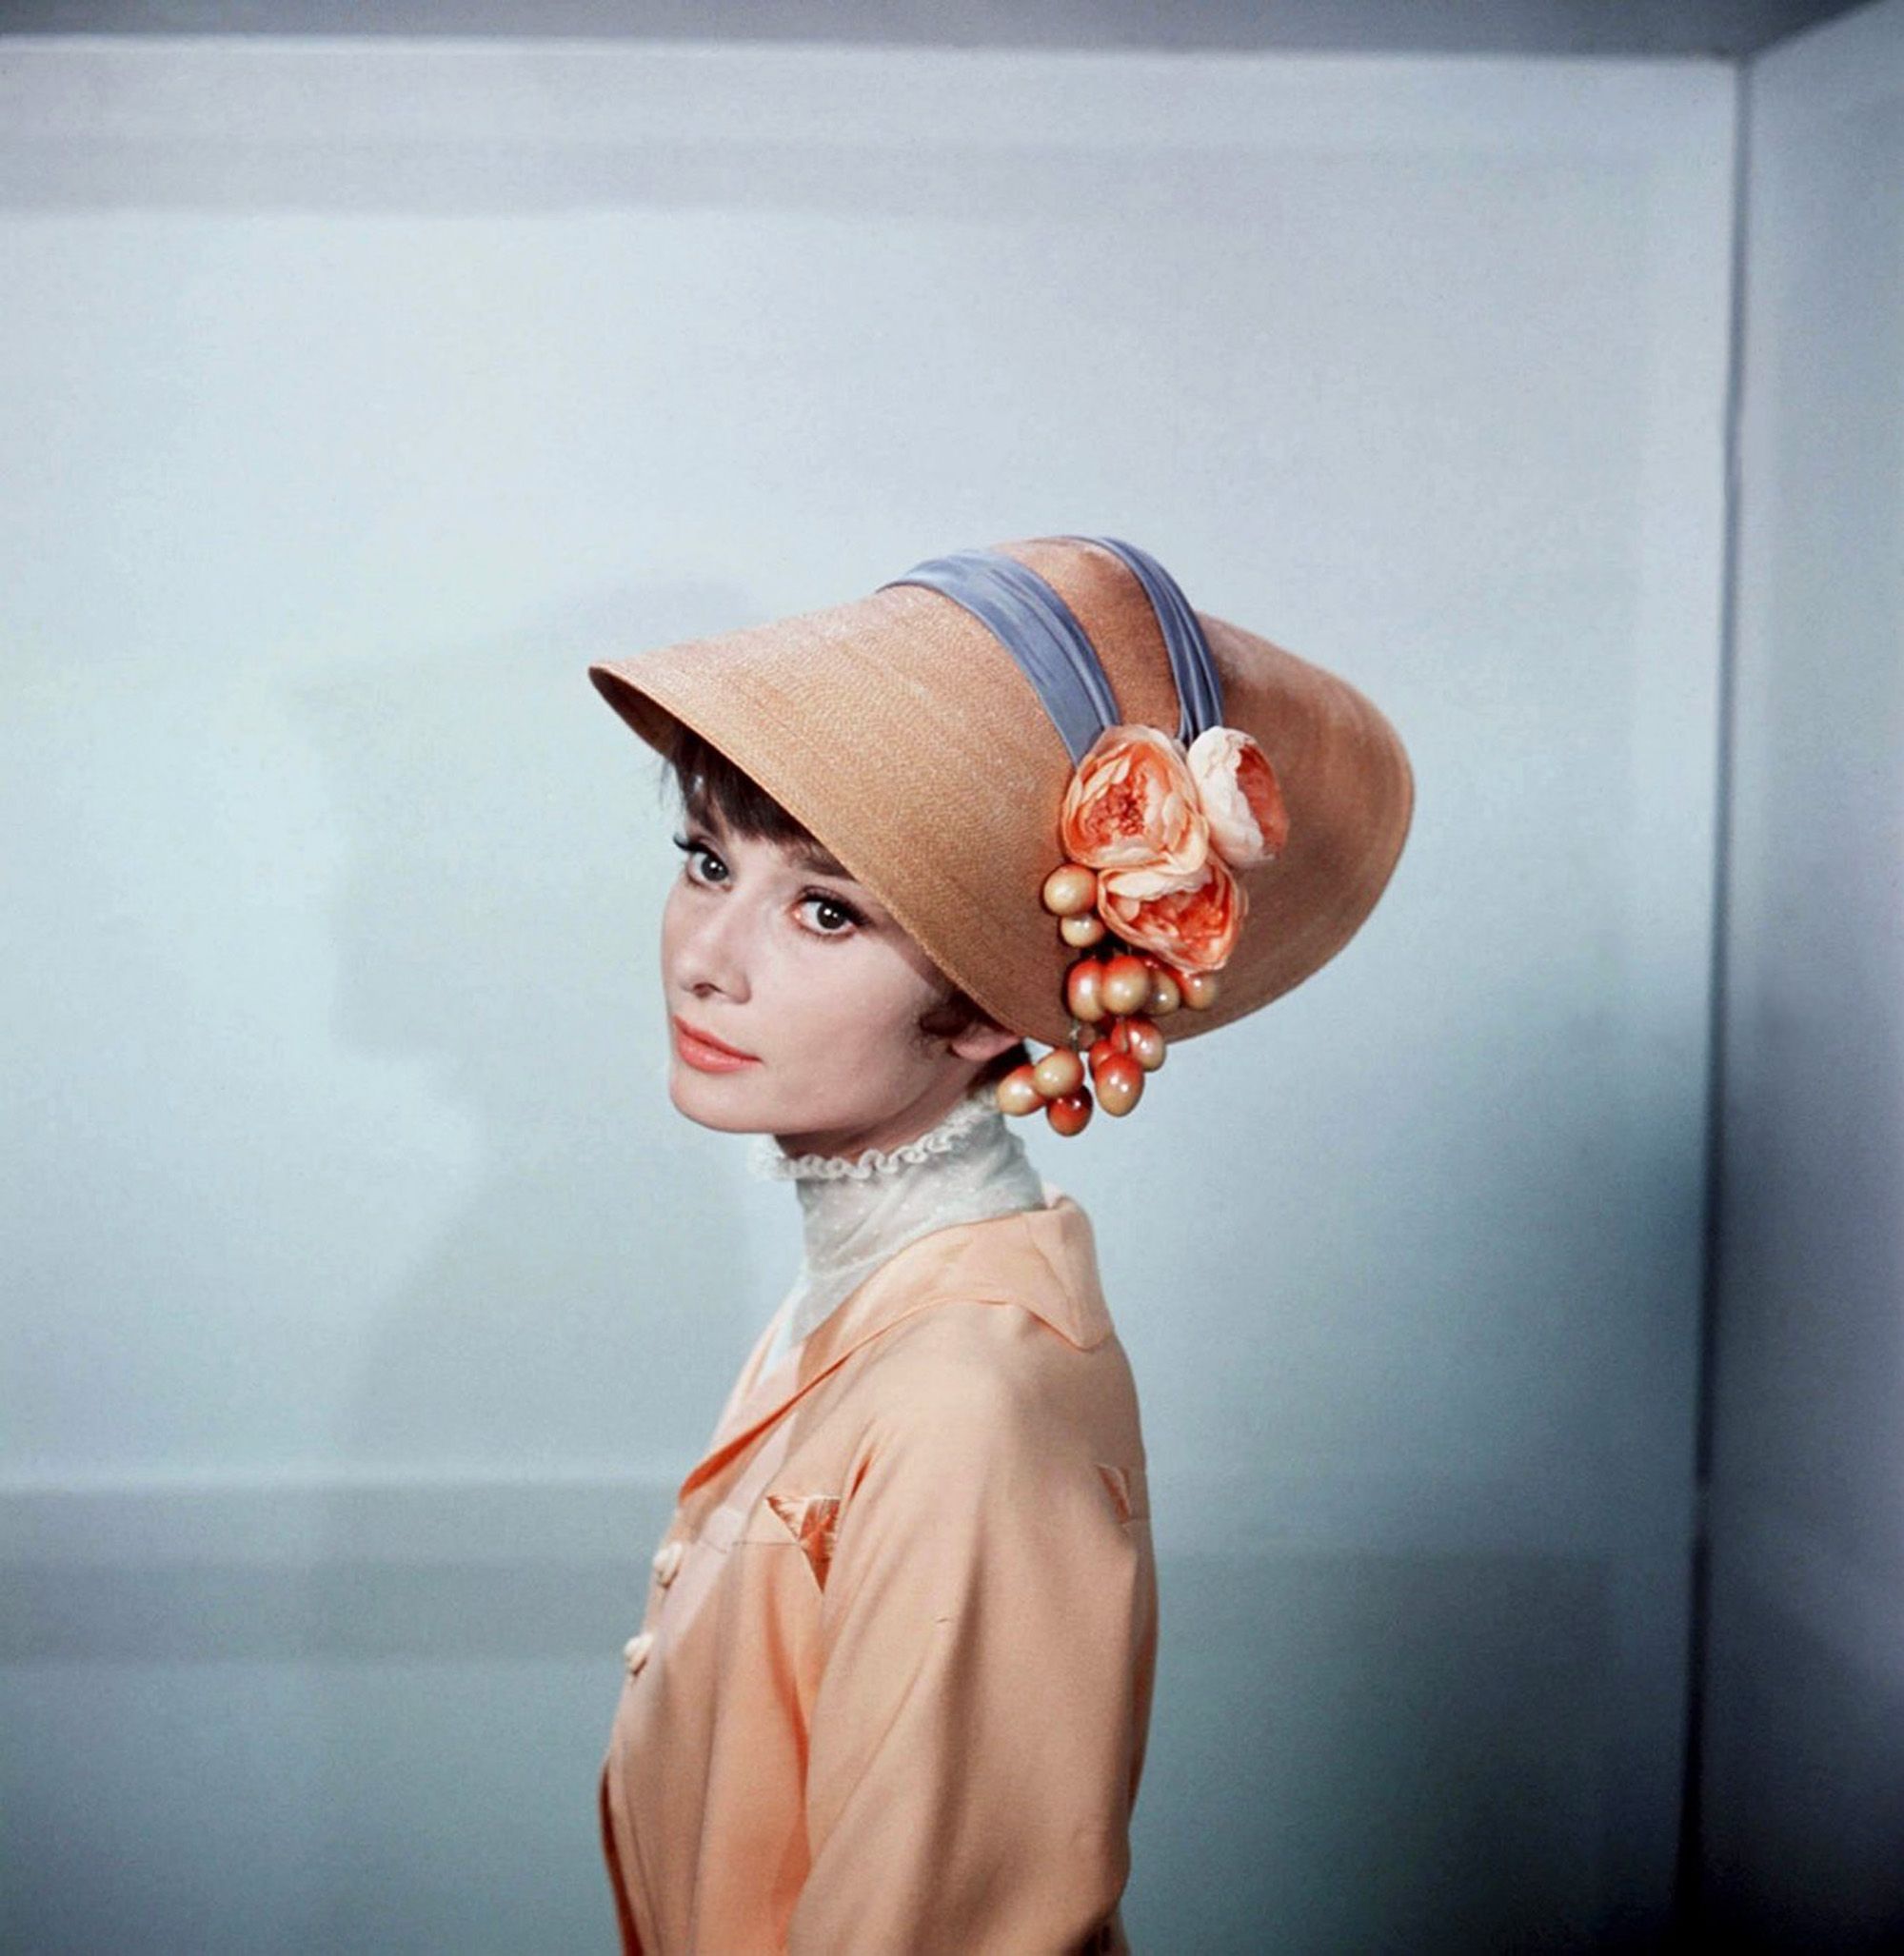 Audrey Hepburn, My Fair Lady (1964) starring Rex Harrison